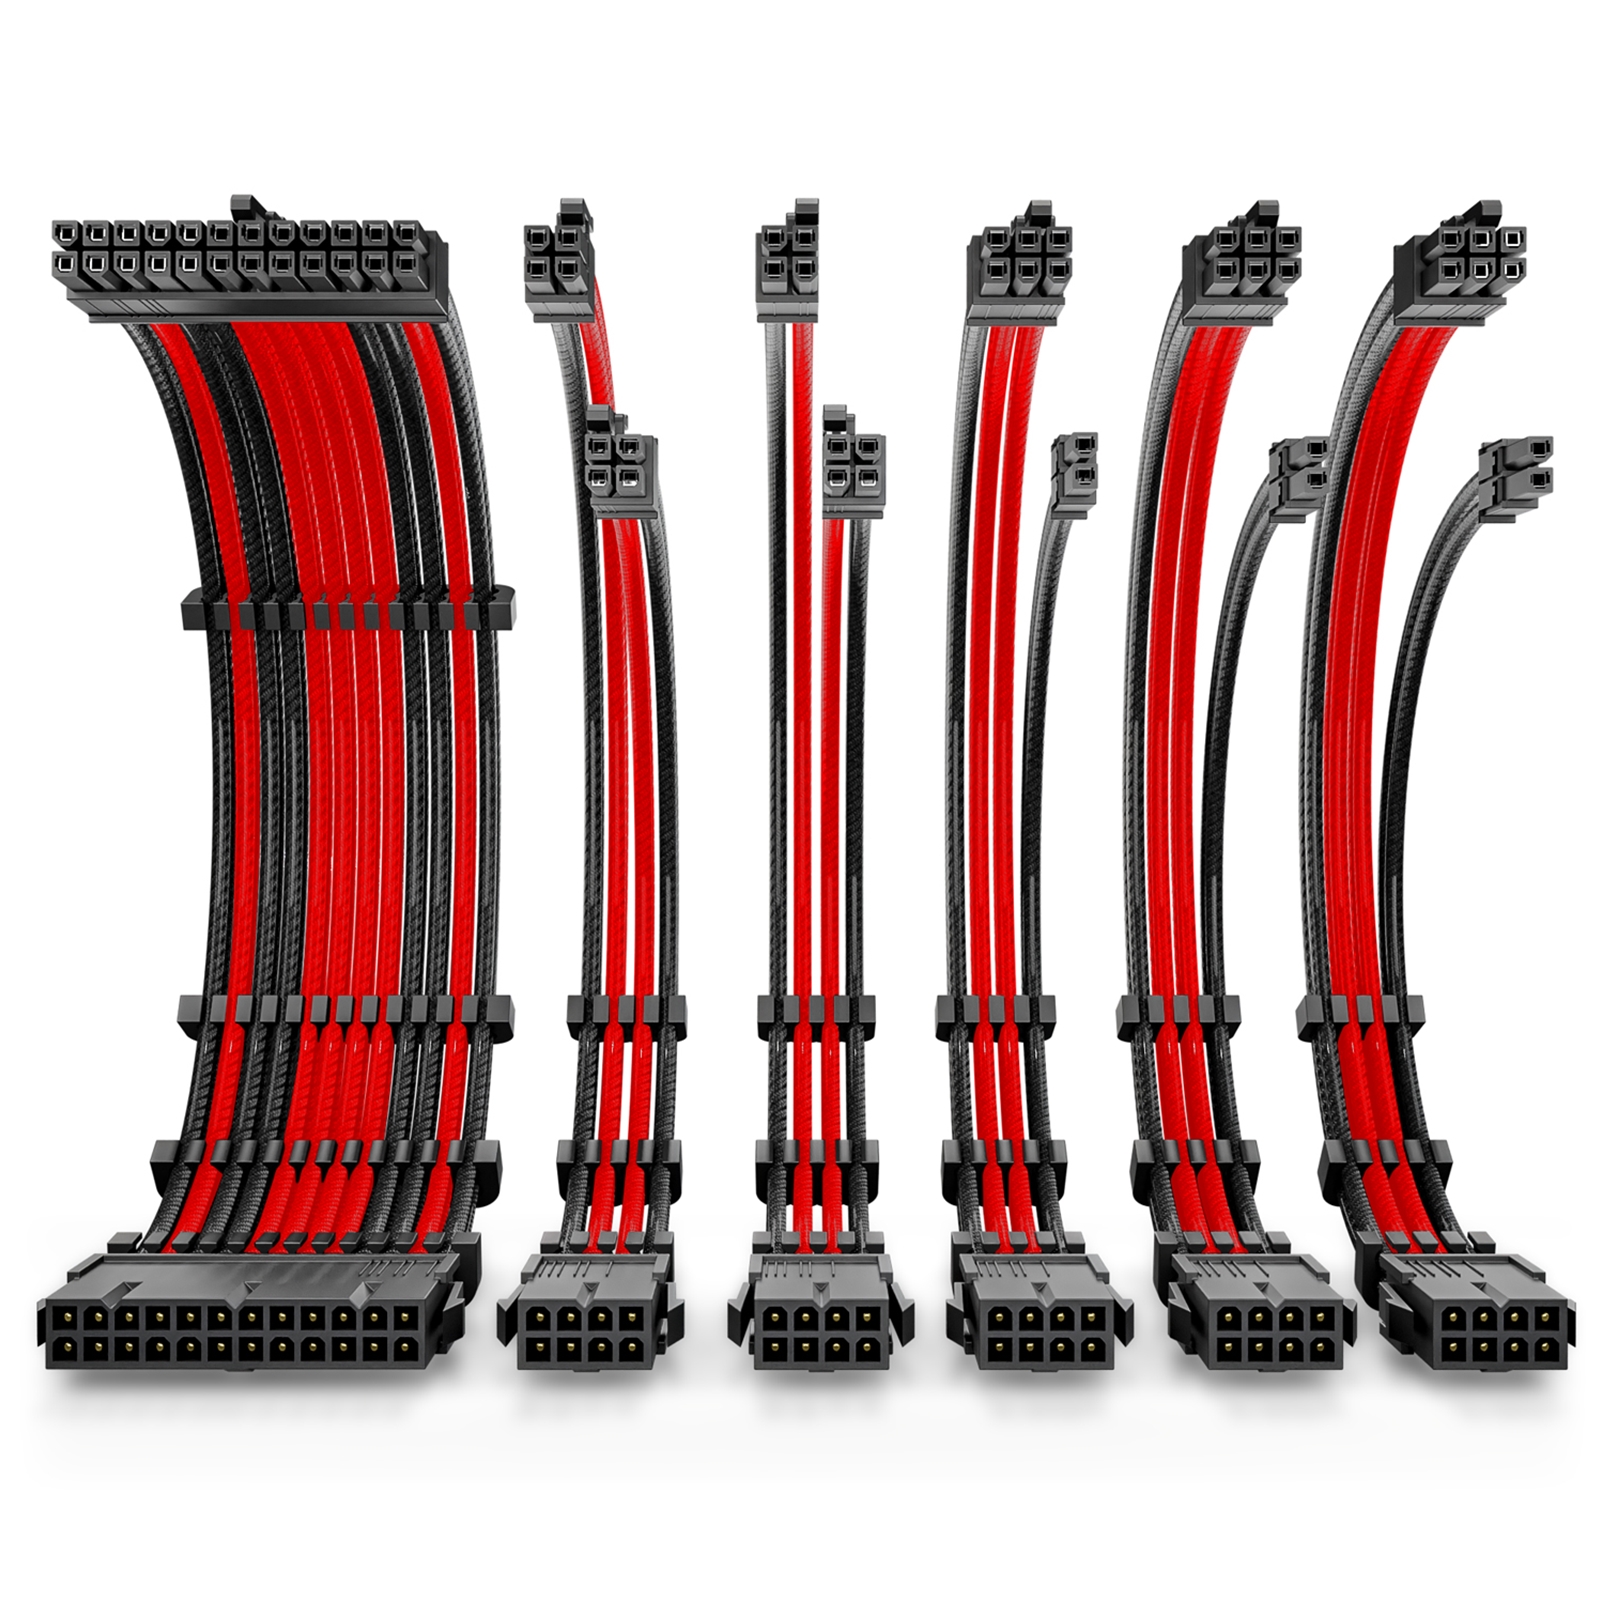 0-761345-777717-9 ANTEC Black/Red PSU Extension Cable Kit - 6 Pack (1x 24 Pin, 2x 4+4 Pin, 3x 6+2 Pin)